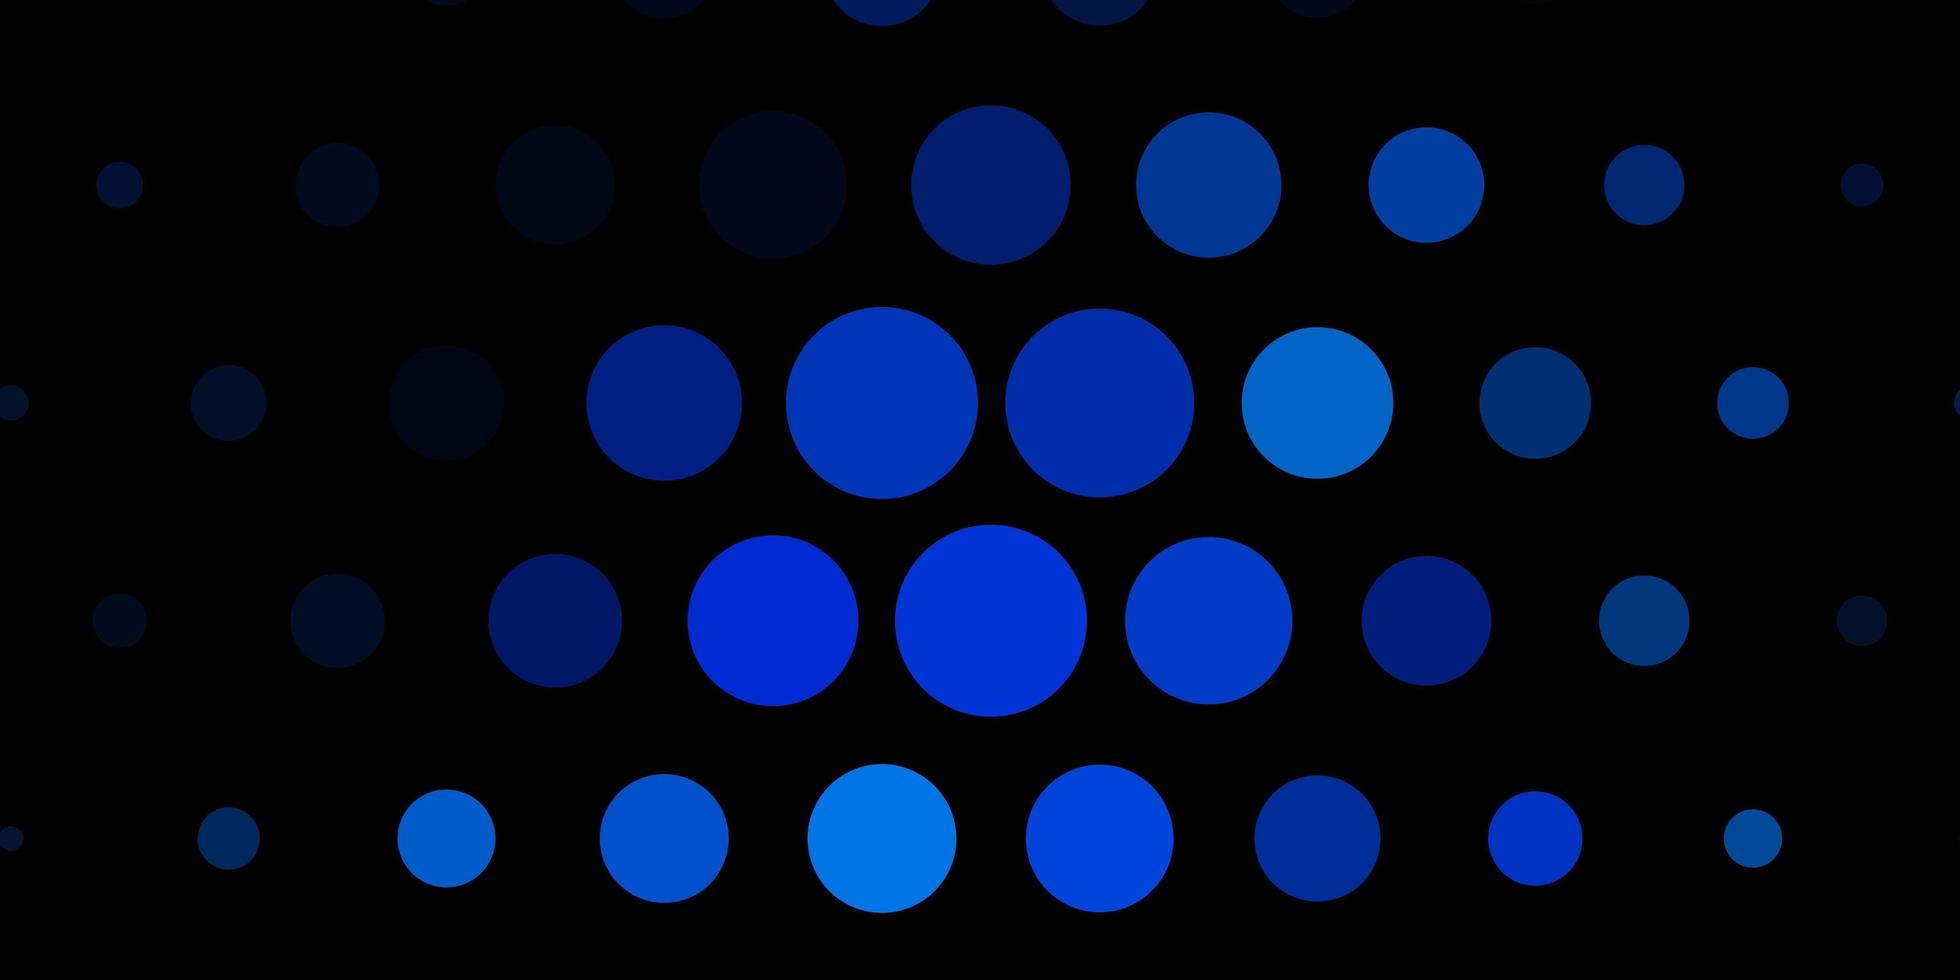 Dark BLUE vector backdrop with circles